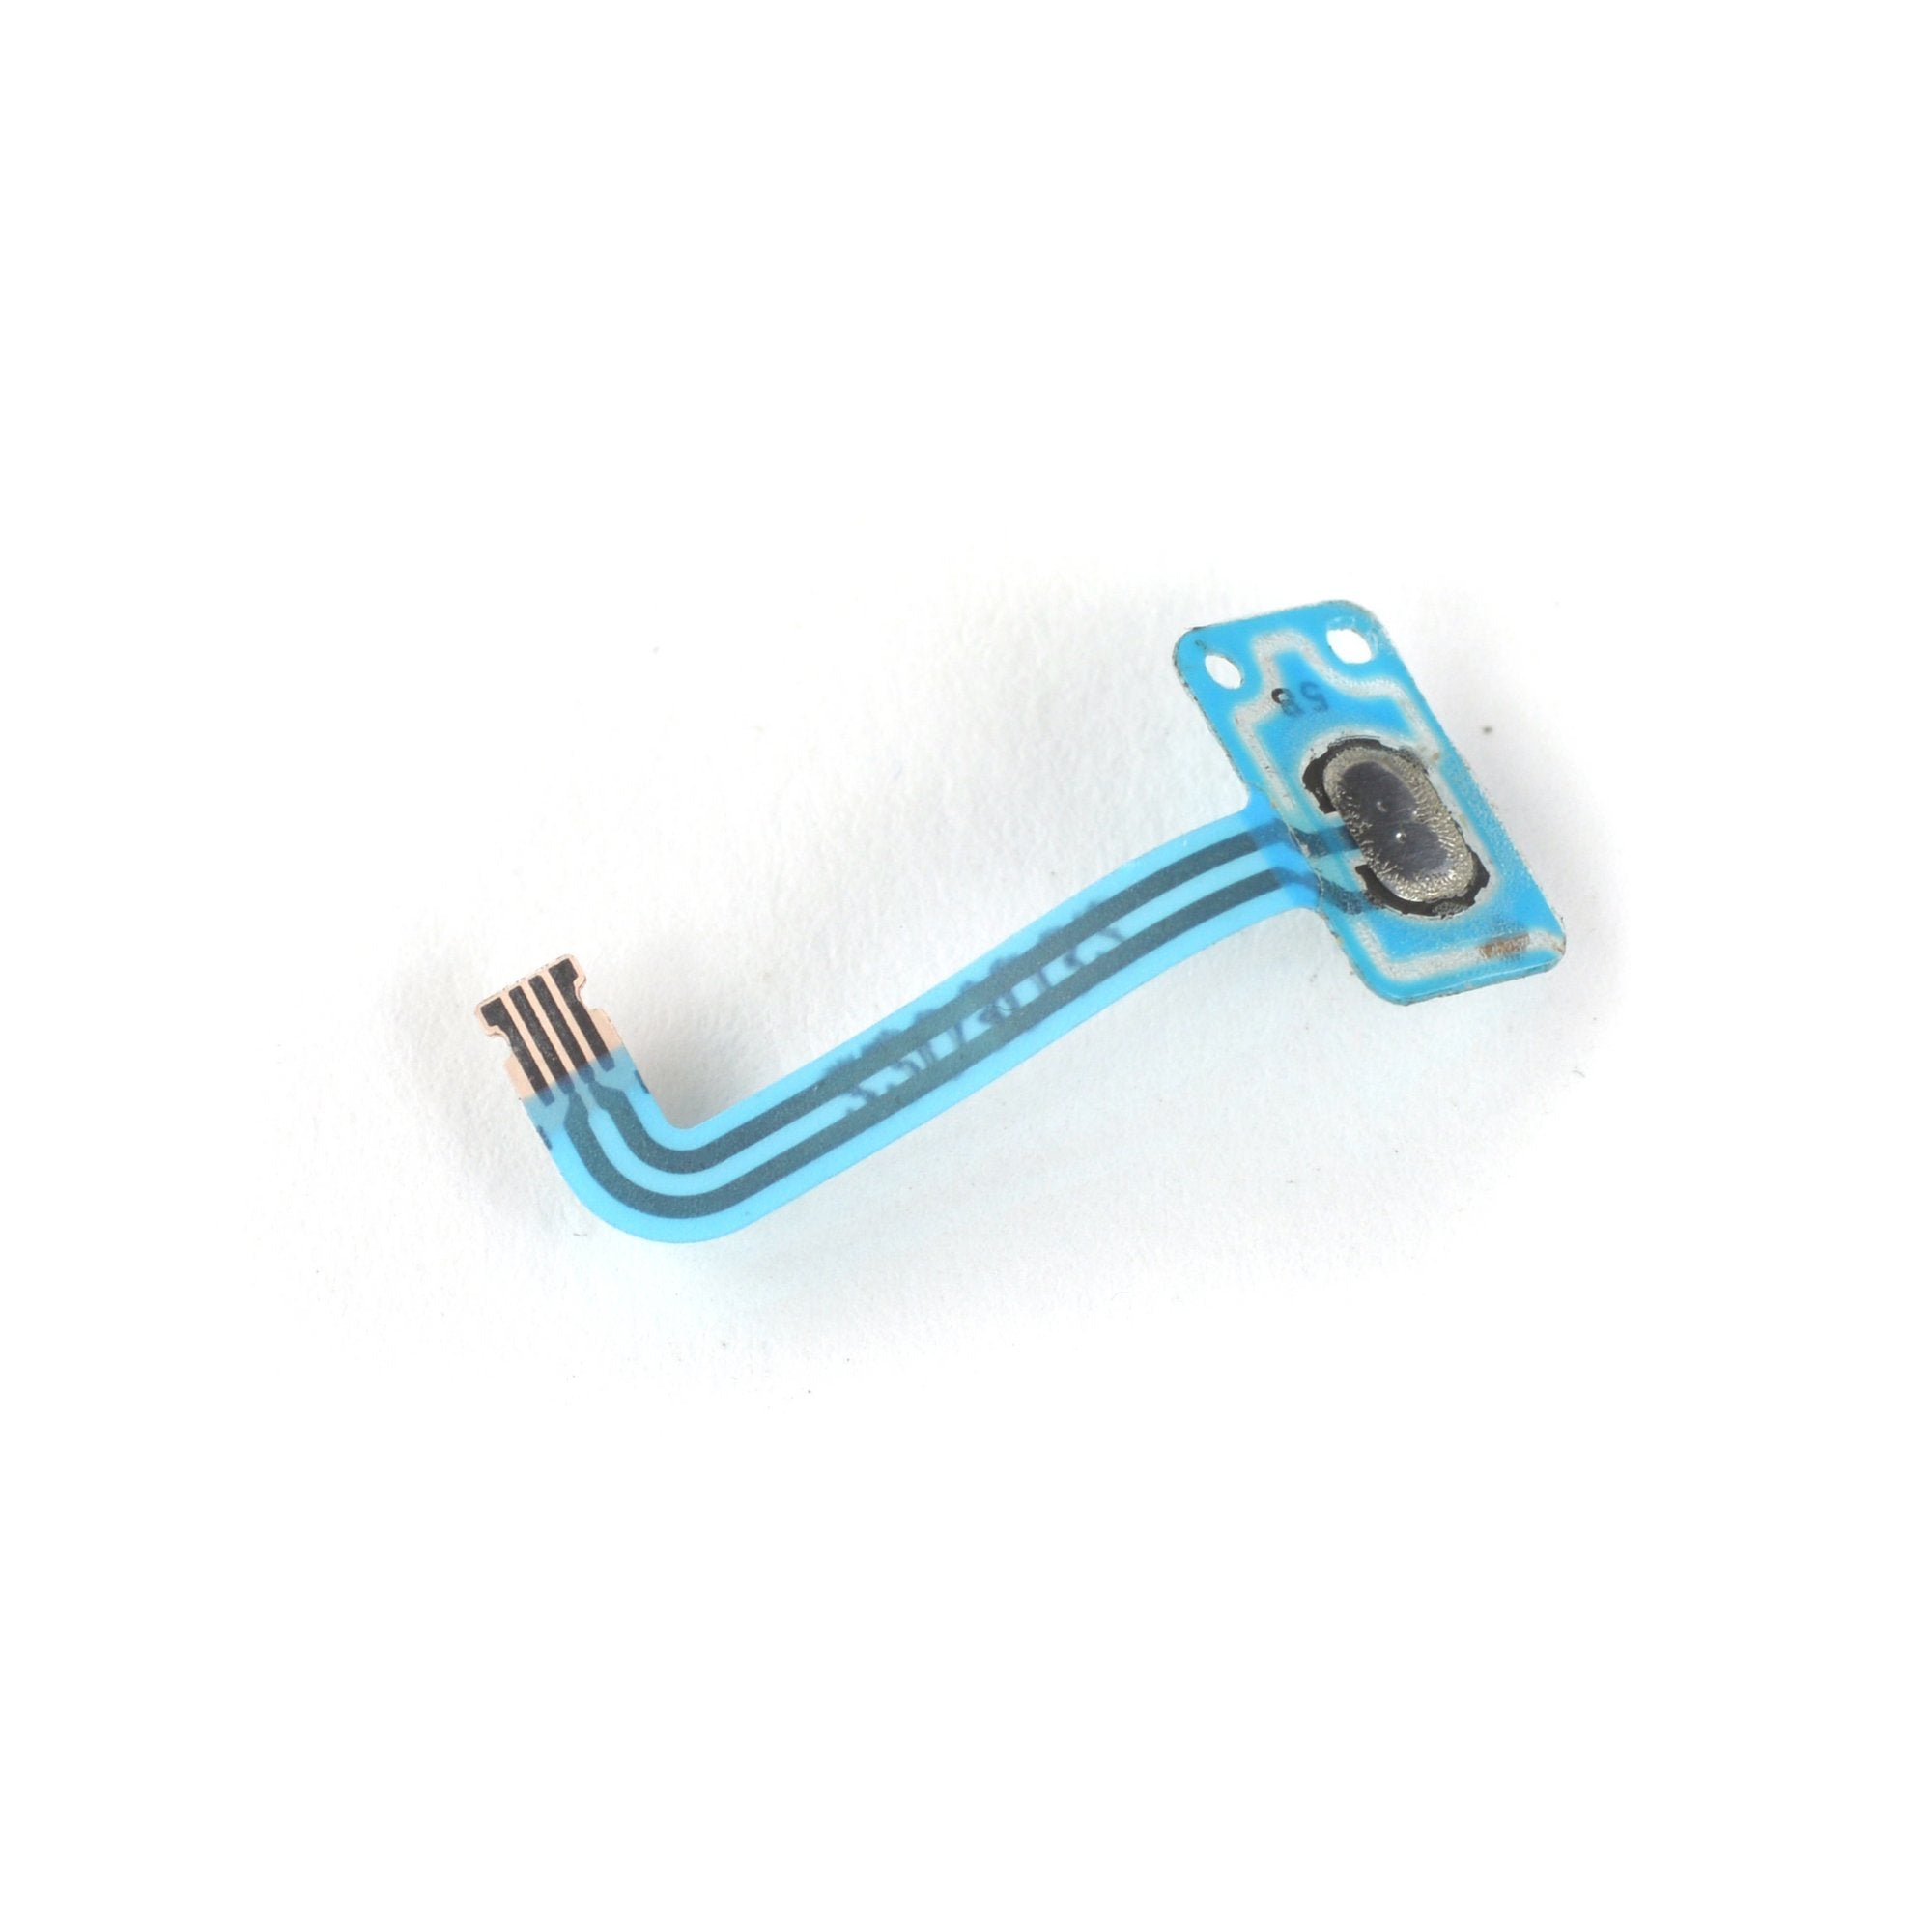 PlayStation Vita Power Button Flex Cable